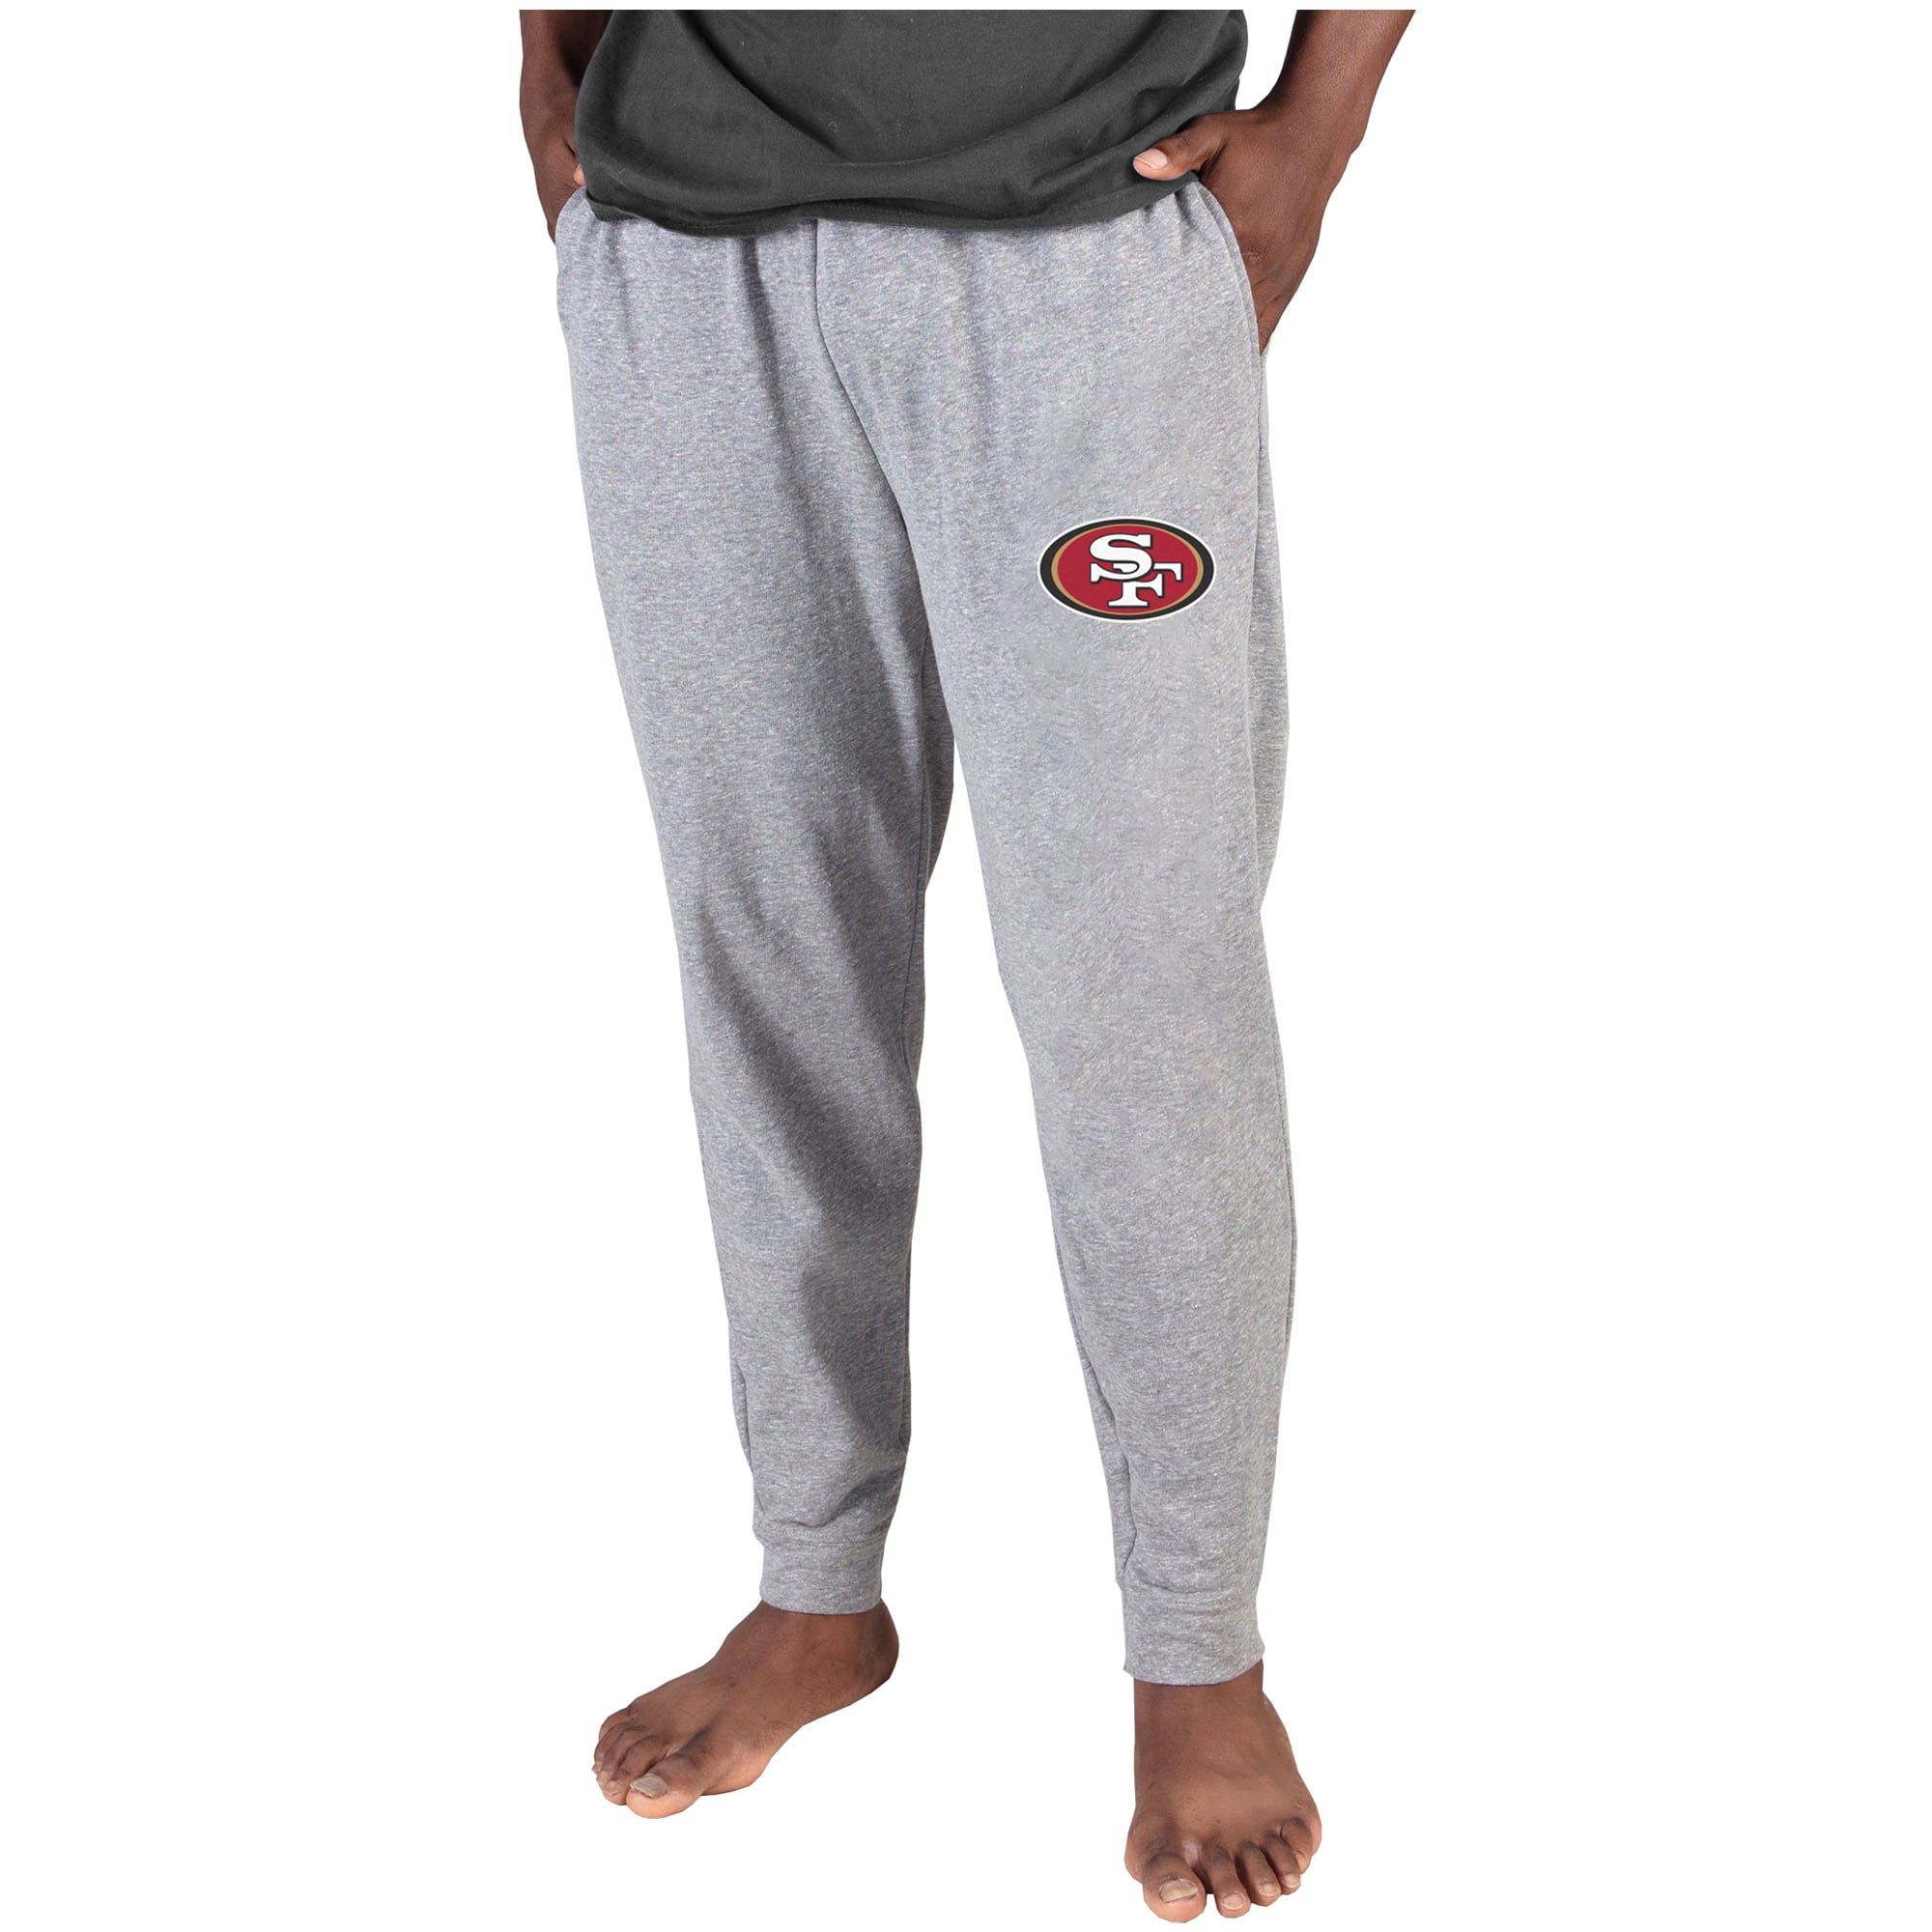 Men's Concepts Sport Gray San Francisco 49ers Lightweight Jogger Sleep Pants - image 1 of 1